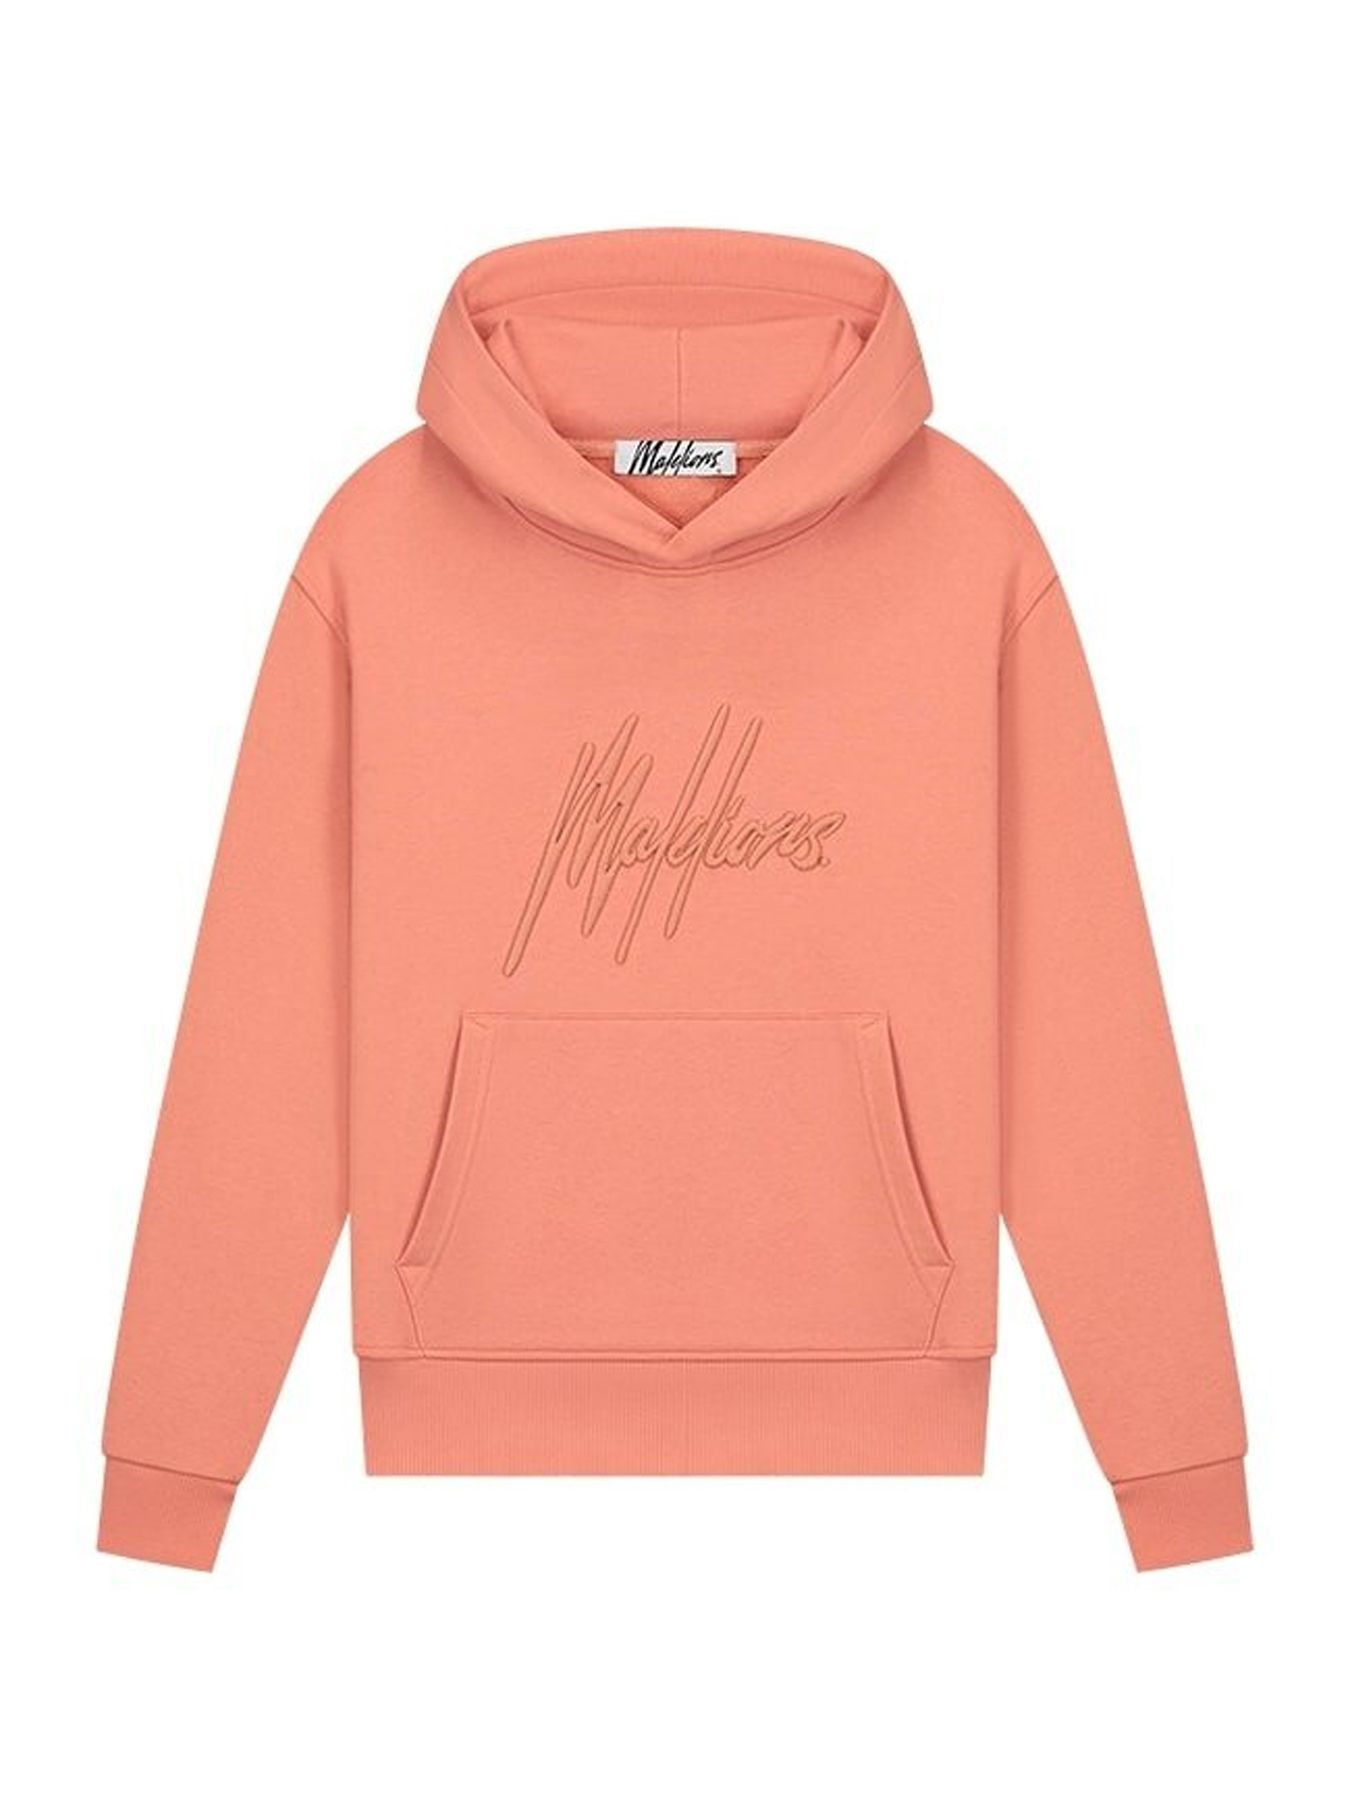 Malelions Women essentials hoodie Coral 2900147835047